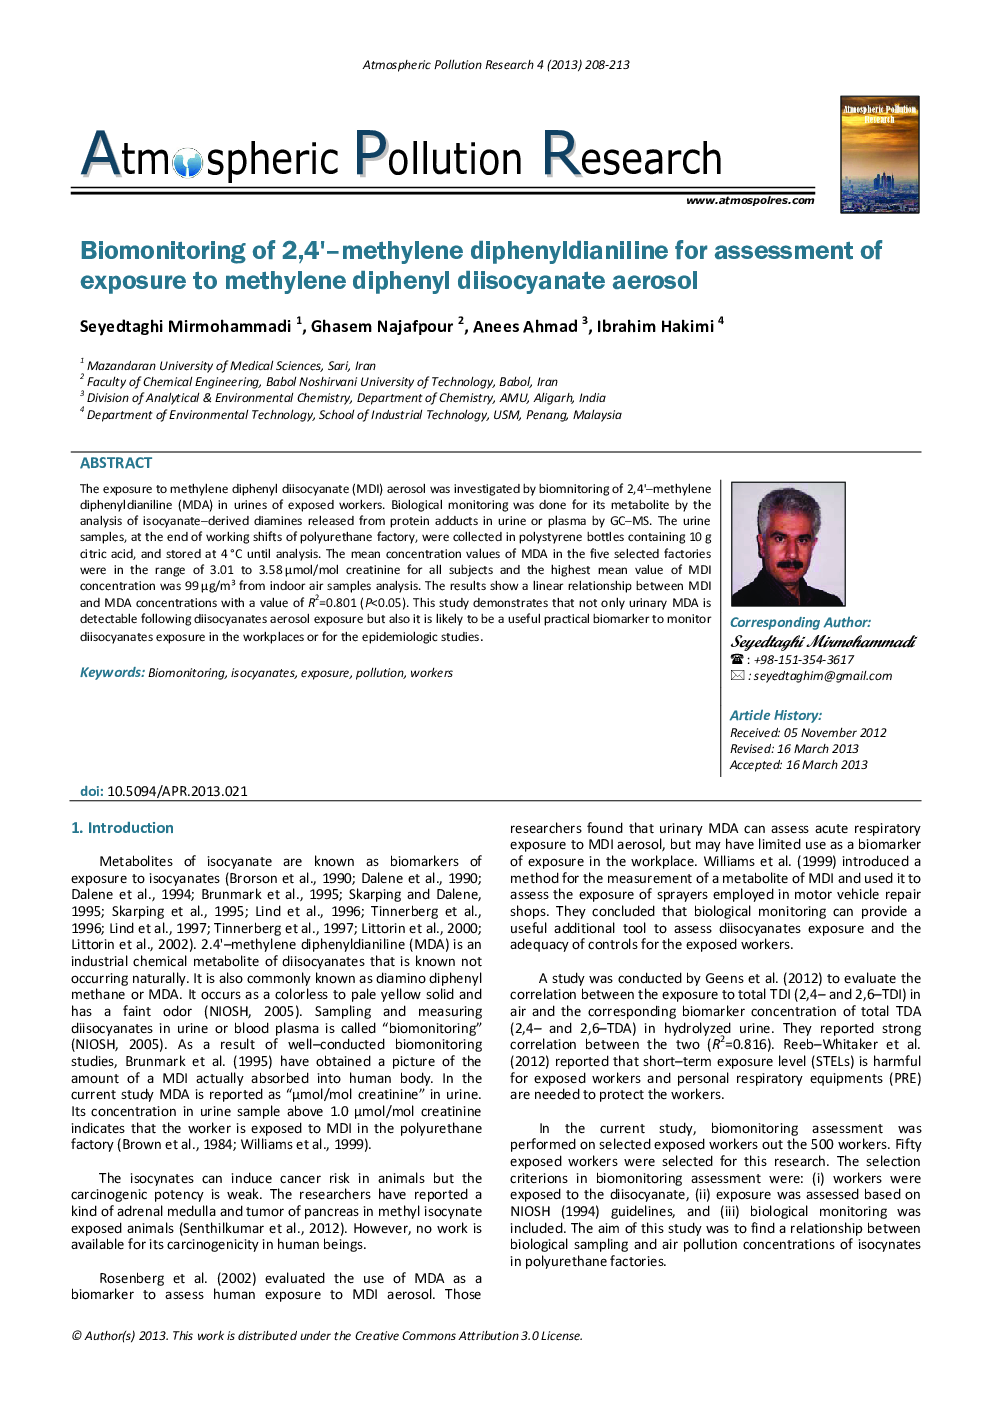 Biomonitoring of 2,4'-methylene diphenyldianiline for assessment of exposure to methylene diphenyl diisocyanate aerosol